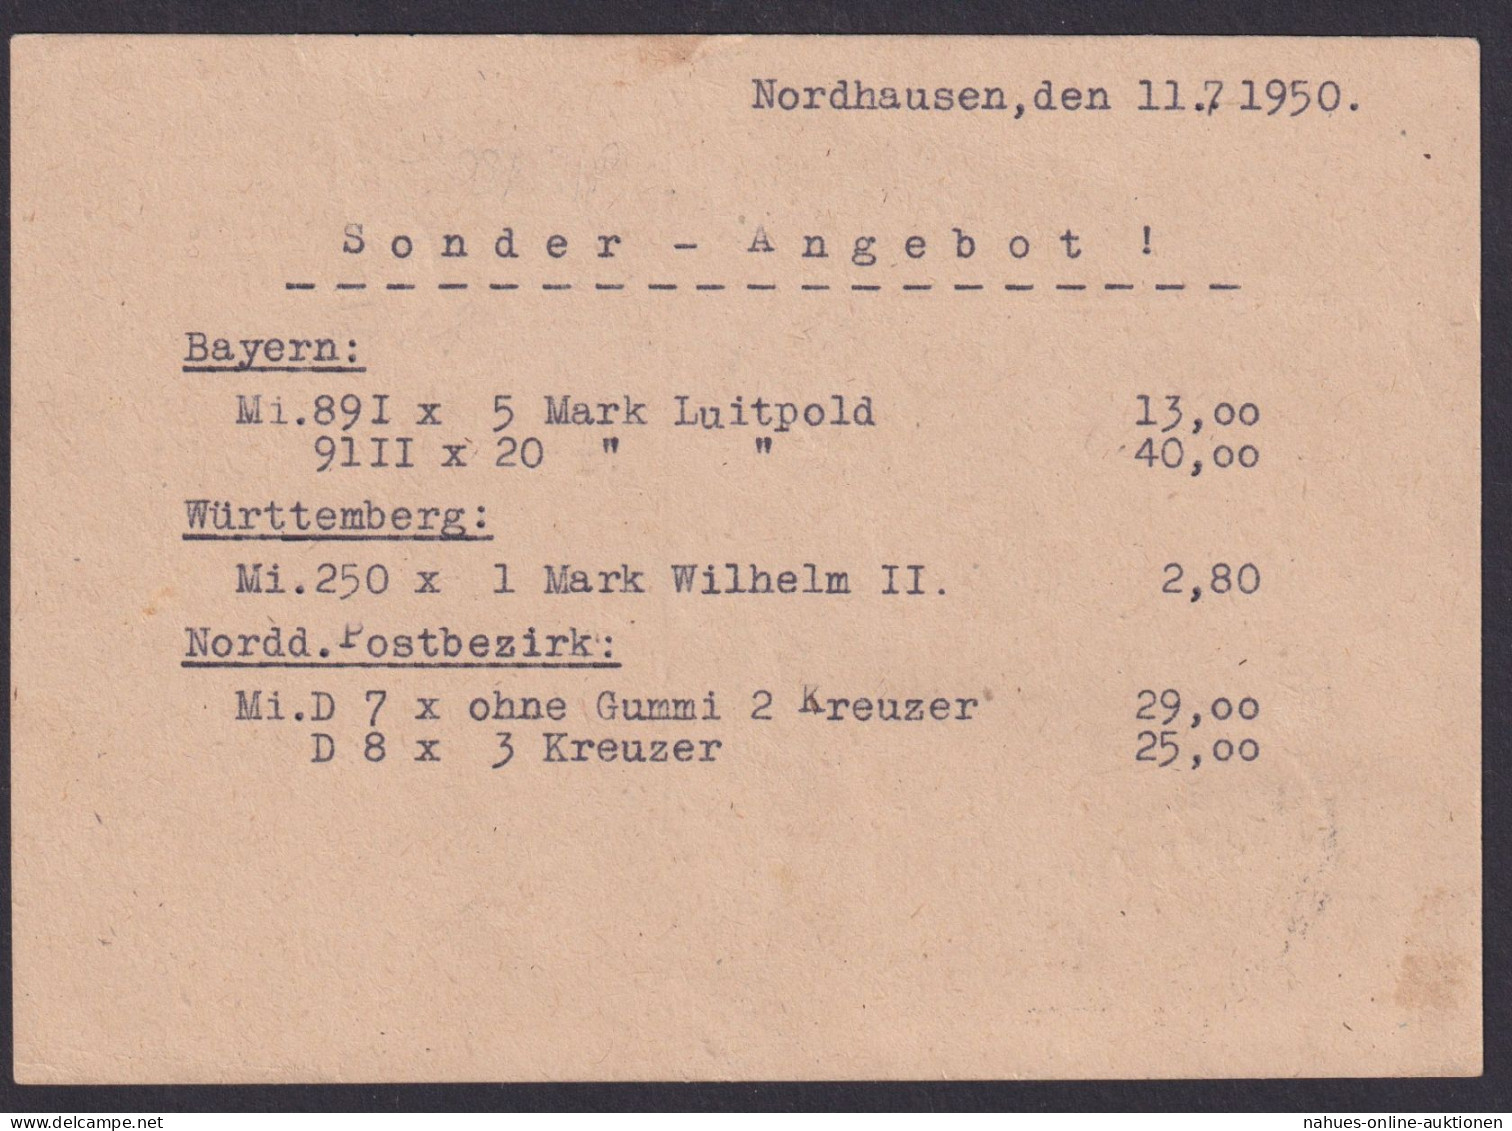 DDR MEF 262 Akademie Postkarte Reklame Rudolf Thumann Nordhausen Kat. 85,00 - Lettres & Documents